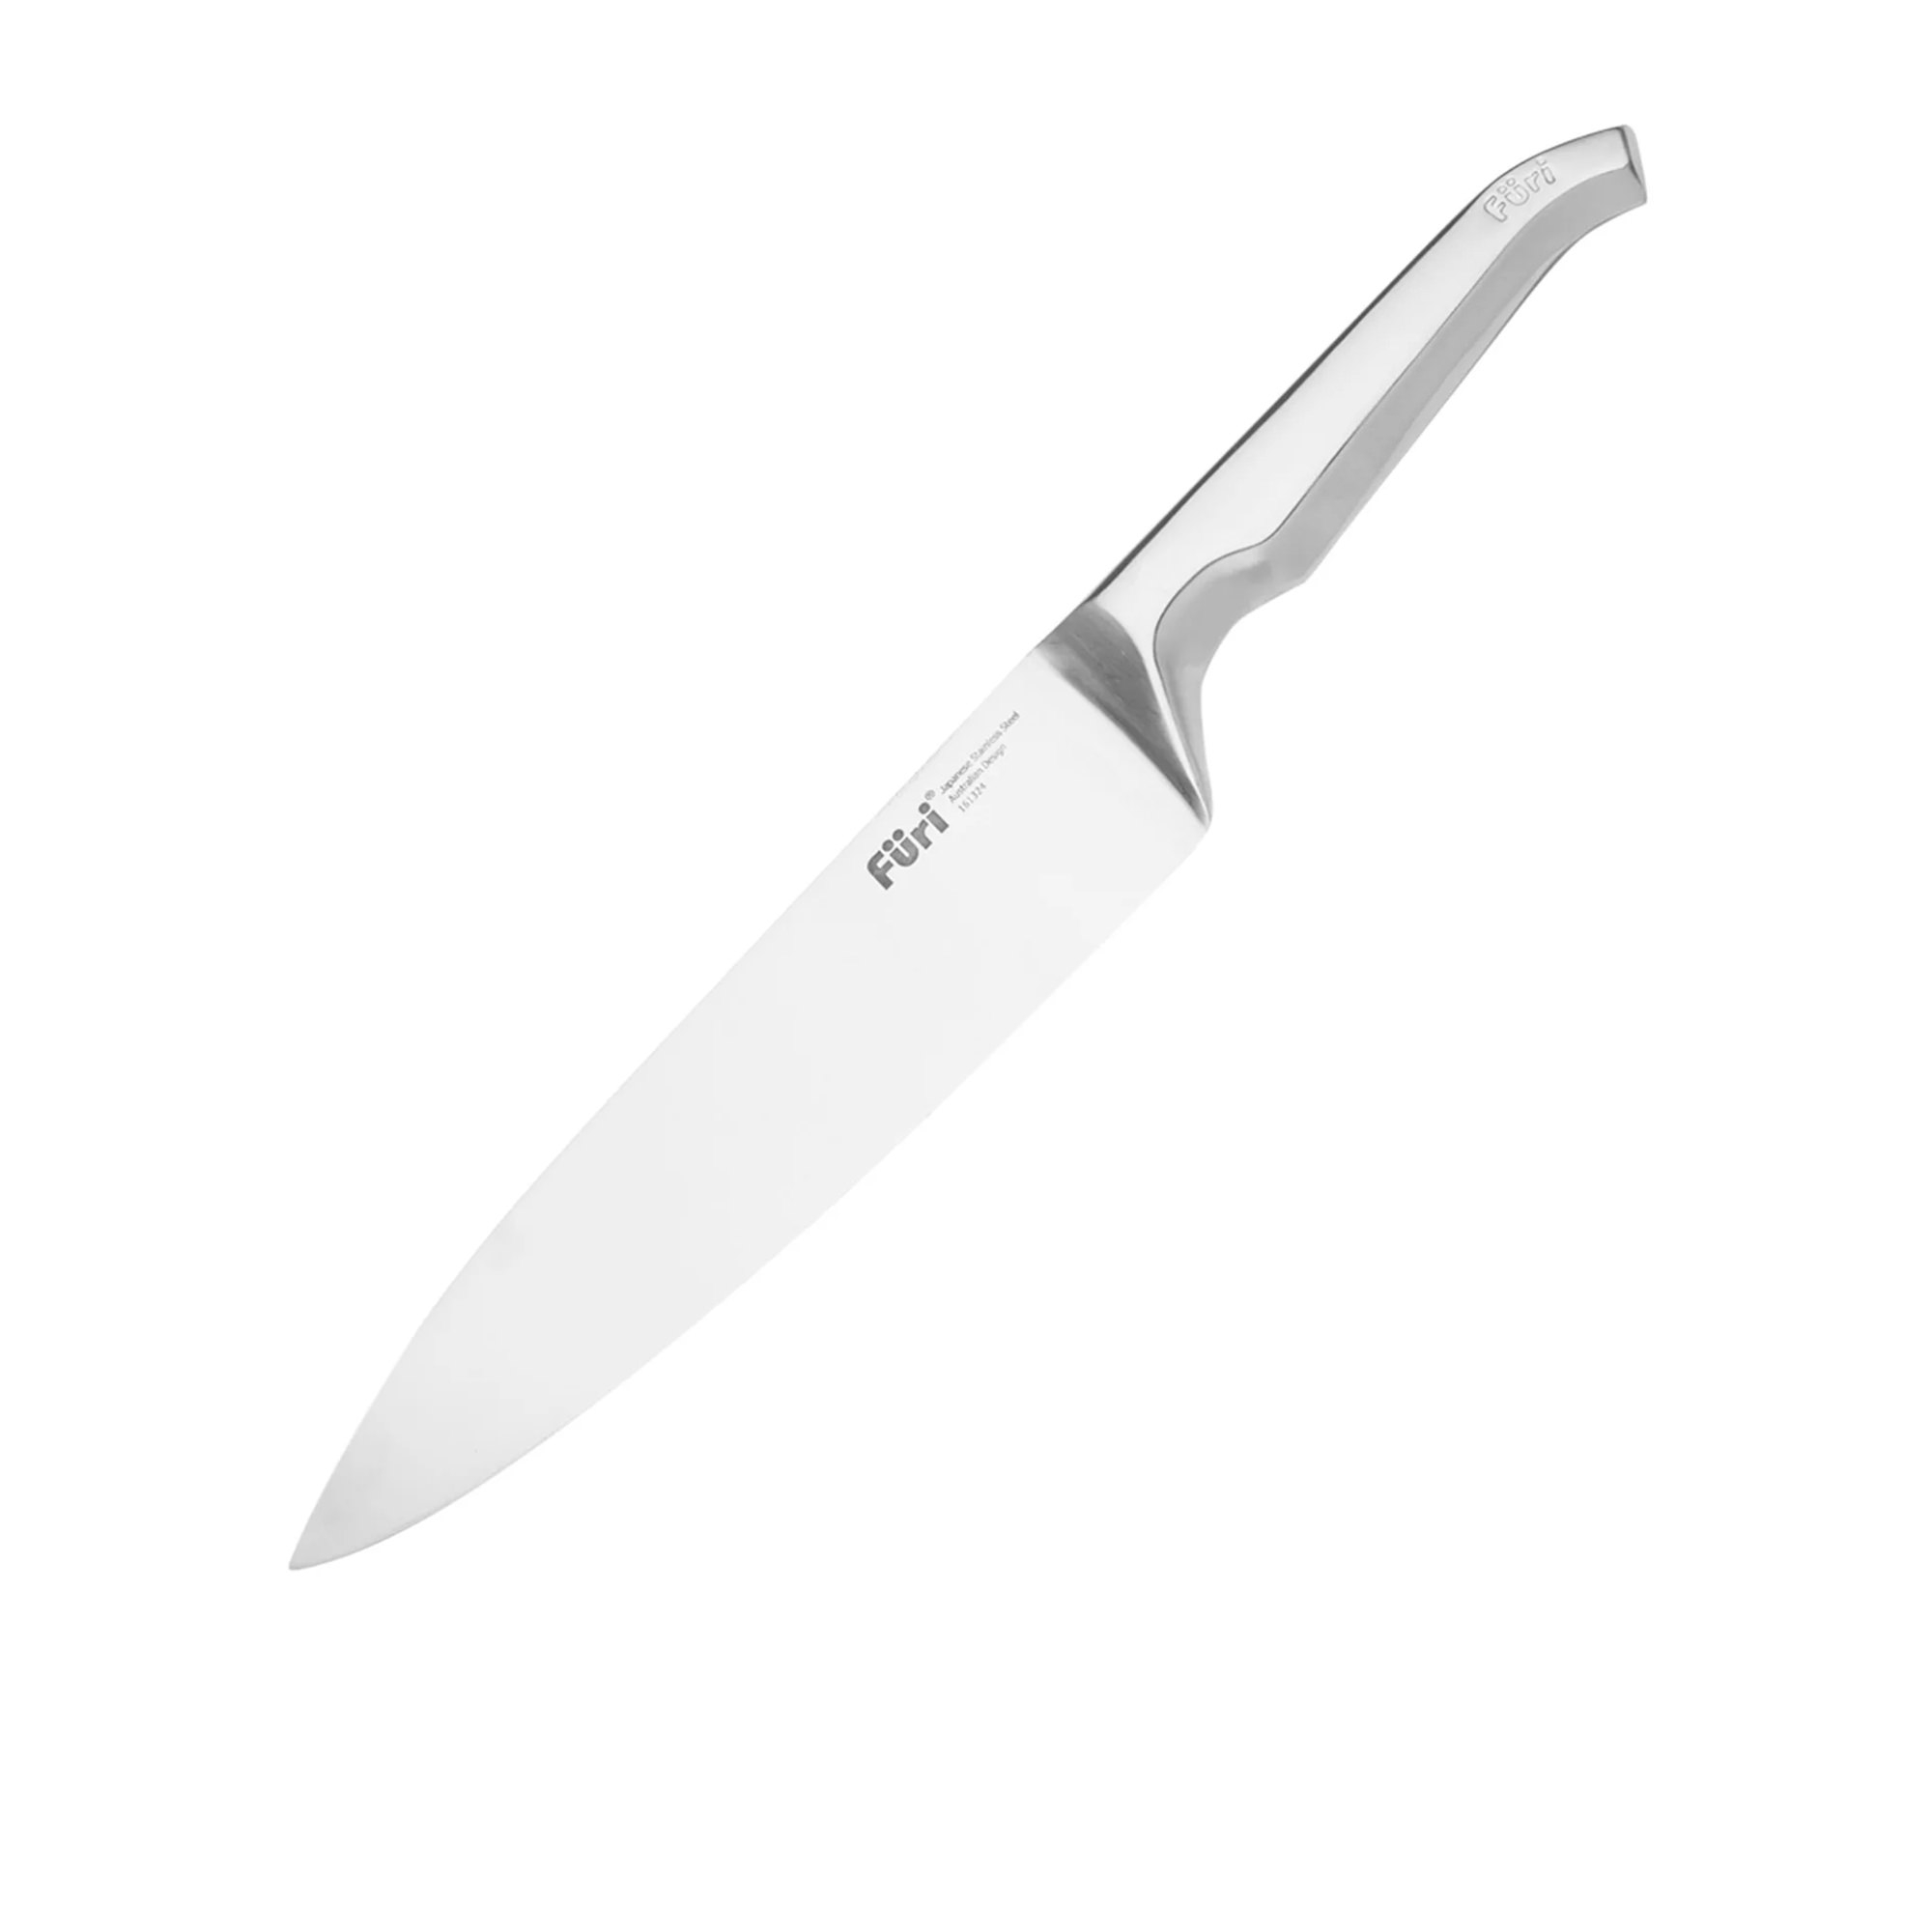 Furi Pro Cook's Knife 20cm Image 1